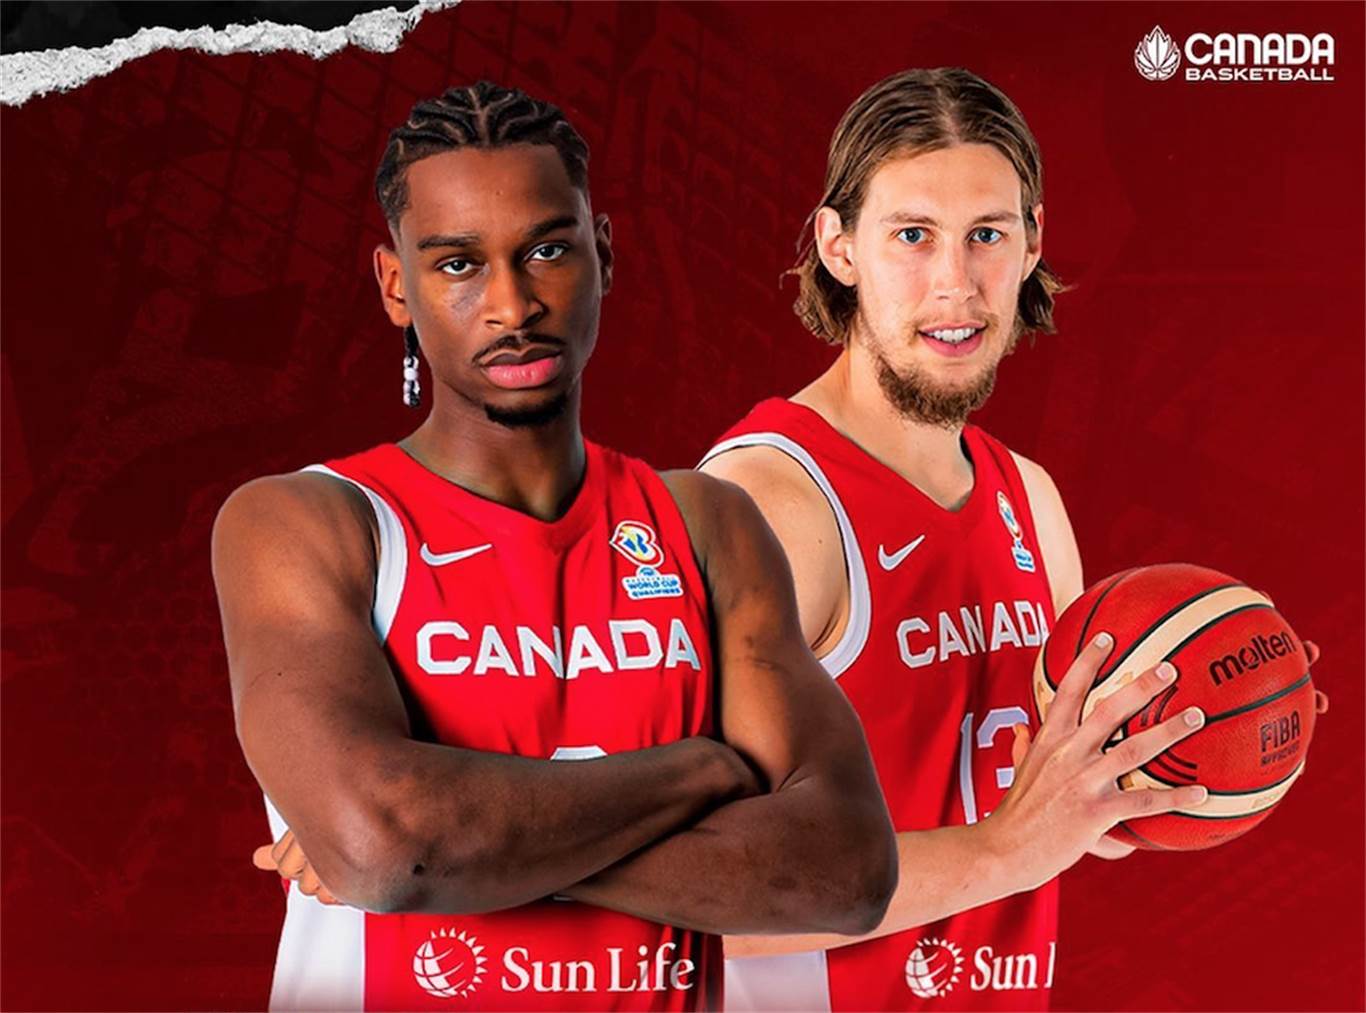 Photo: Canada Basketball